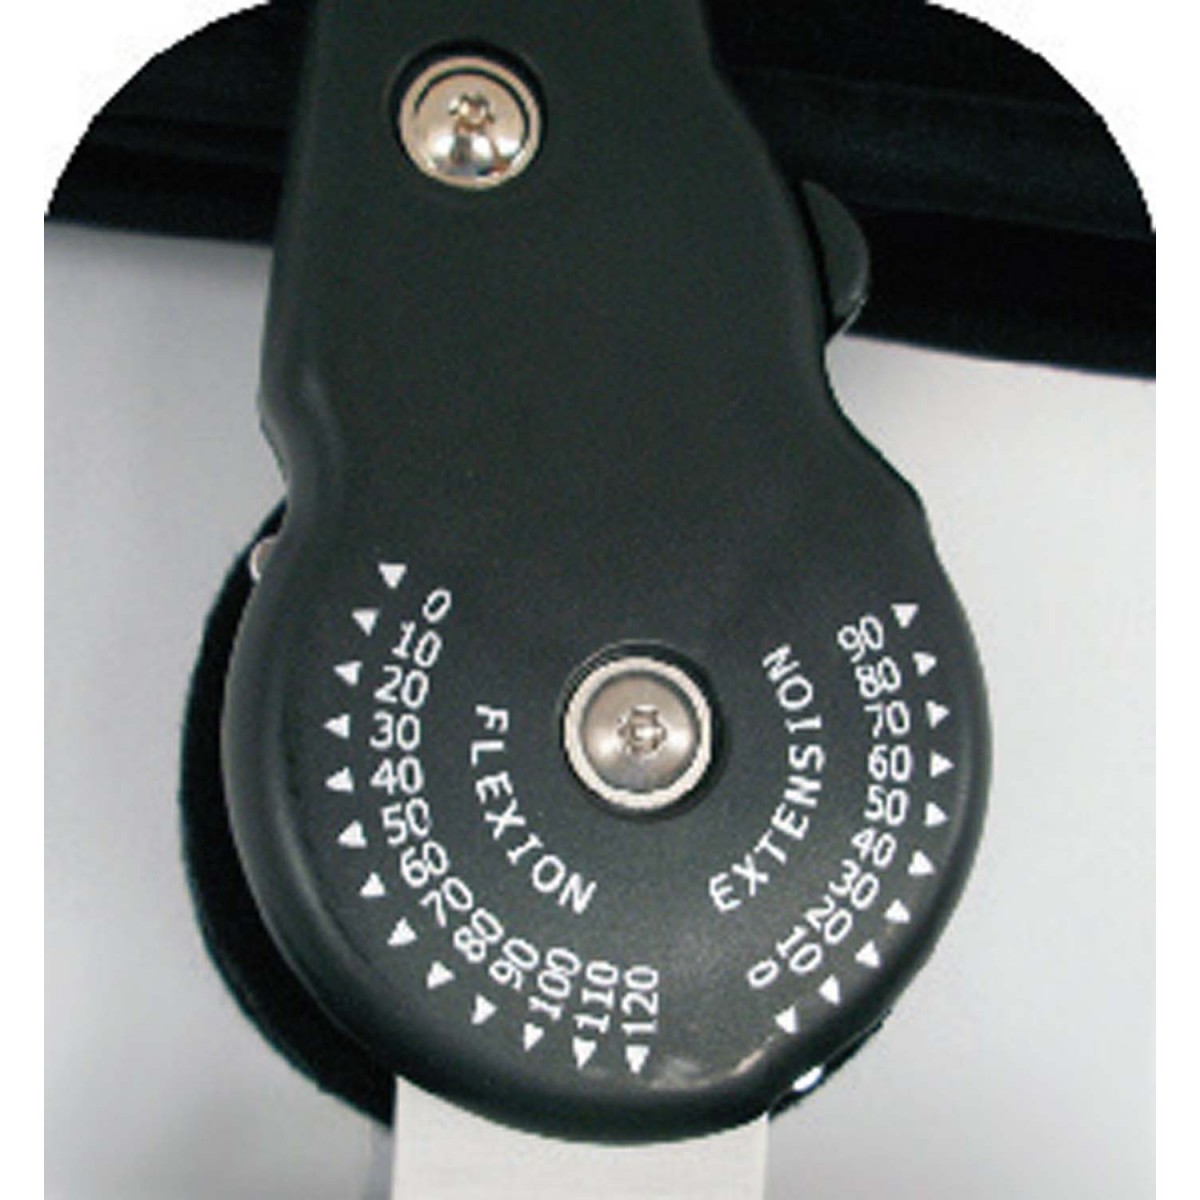 Medical Brace Νάρθηκας Μηροκνημικός Λειτουργικό Με Γωνιόμετρο COOL TC/G700PA/C 50 cm